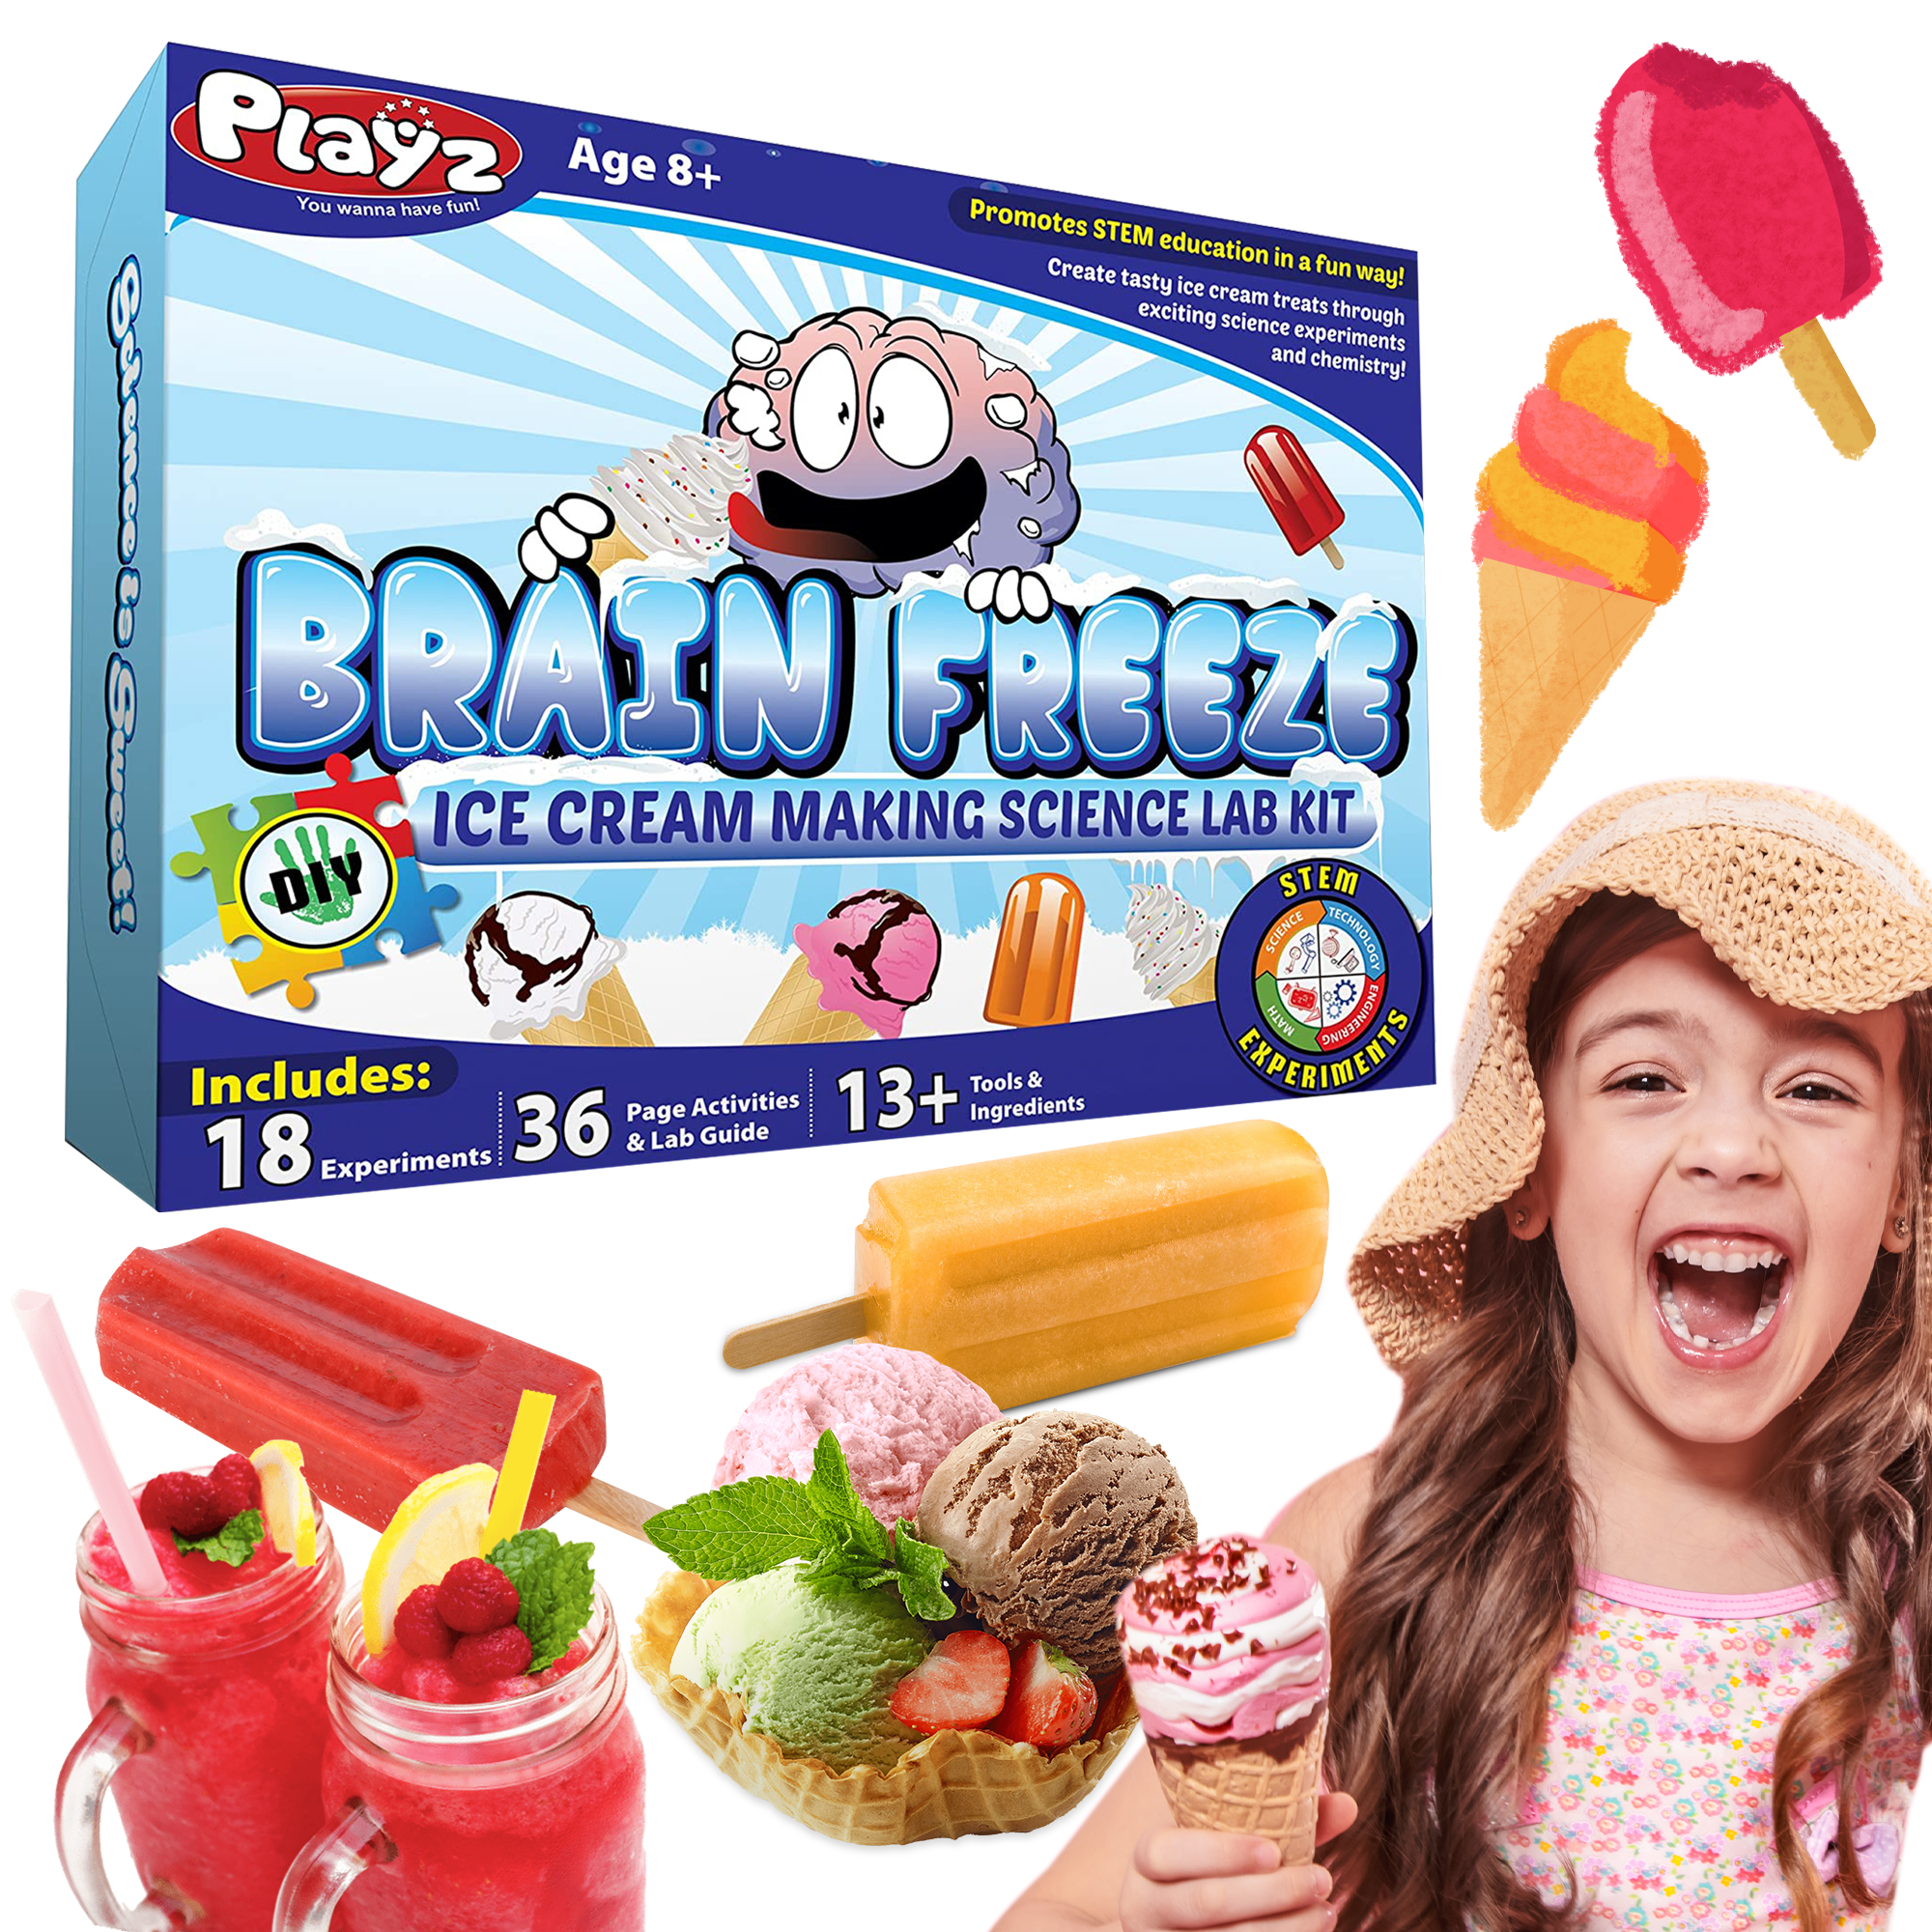 Play & Freeze Ice Cream Maker